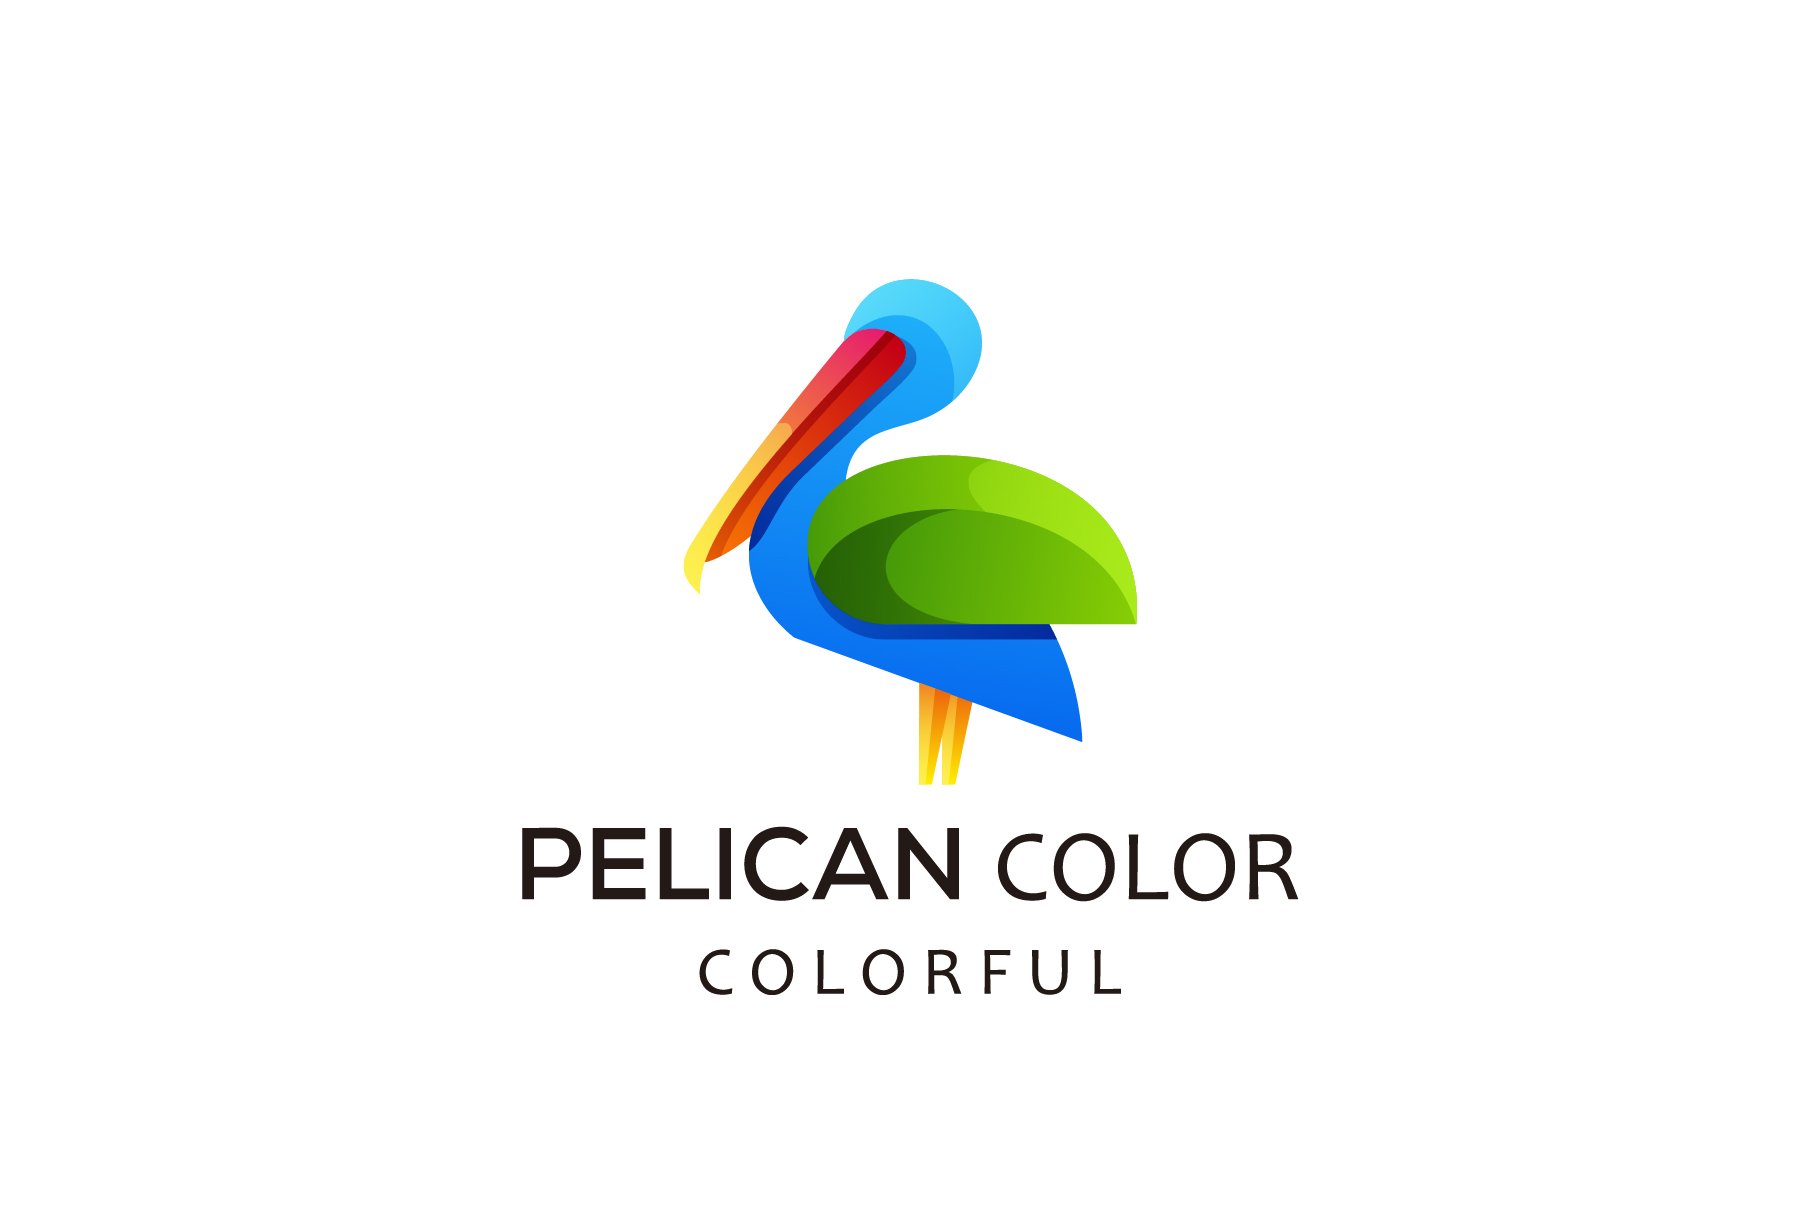 pelican logo vector gradient colorfu cover image.